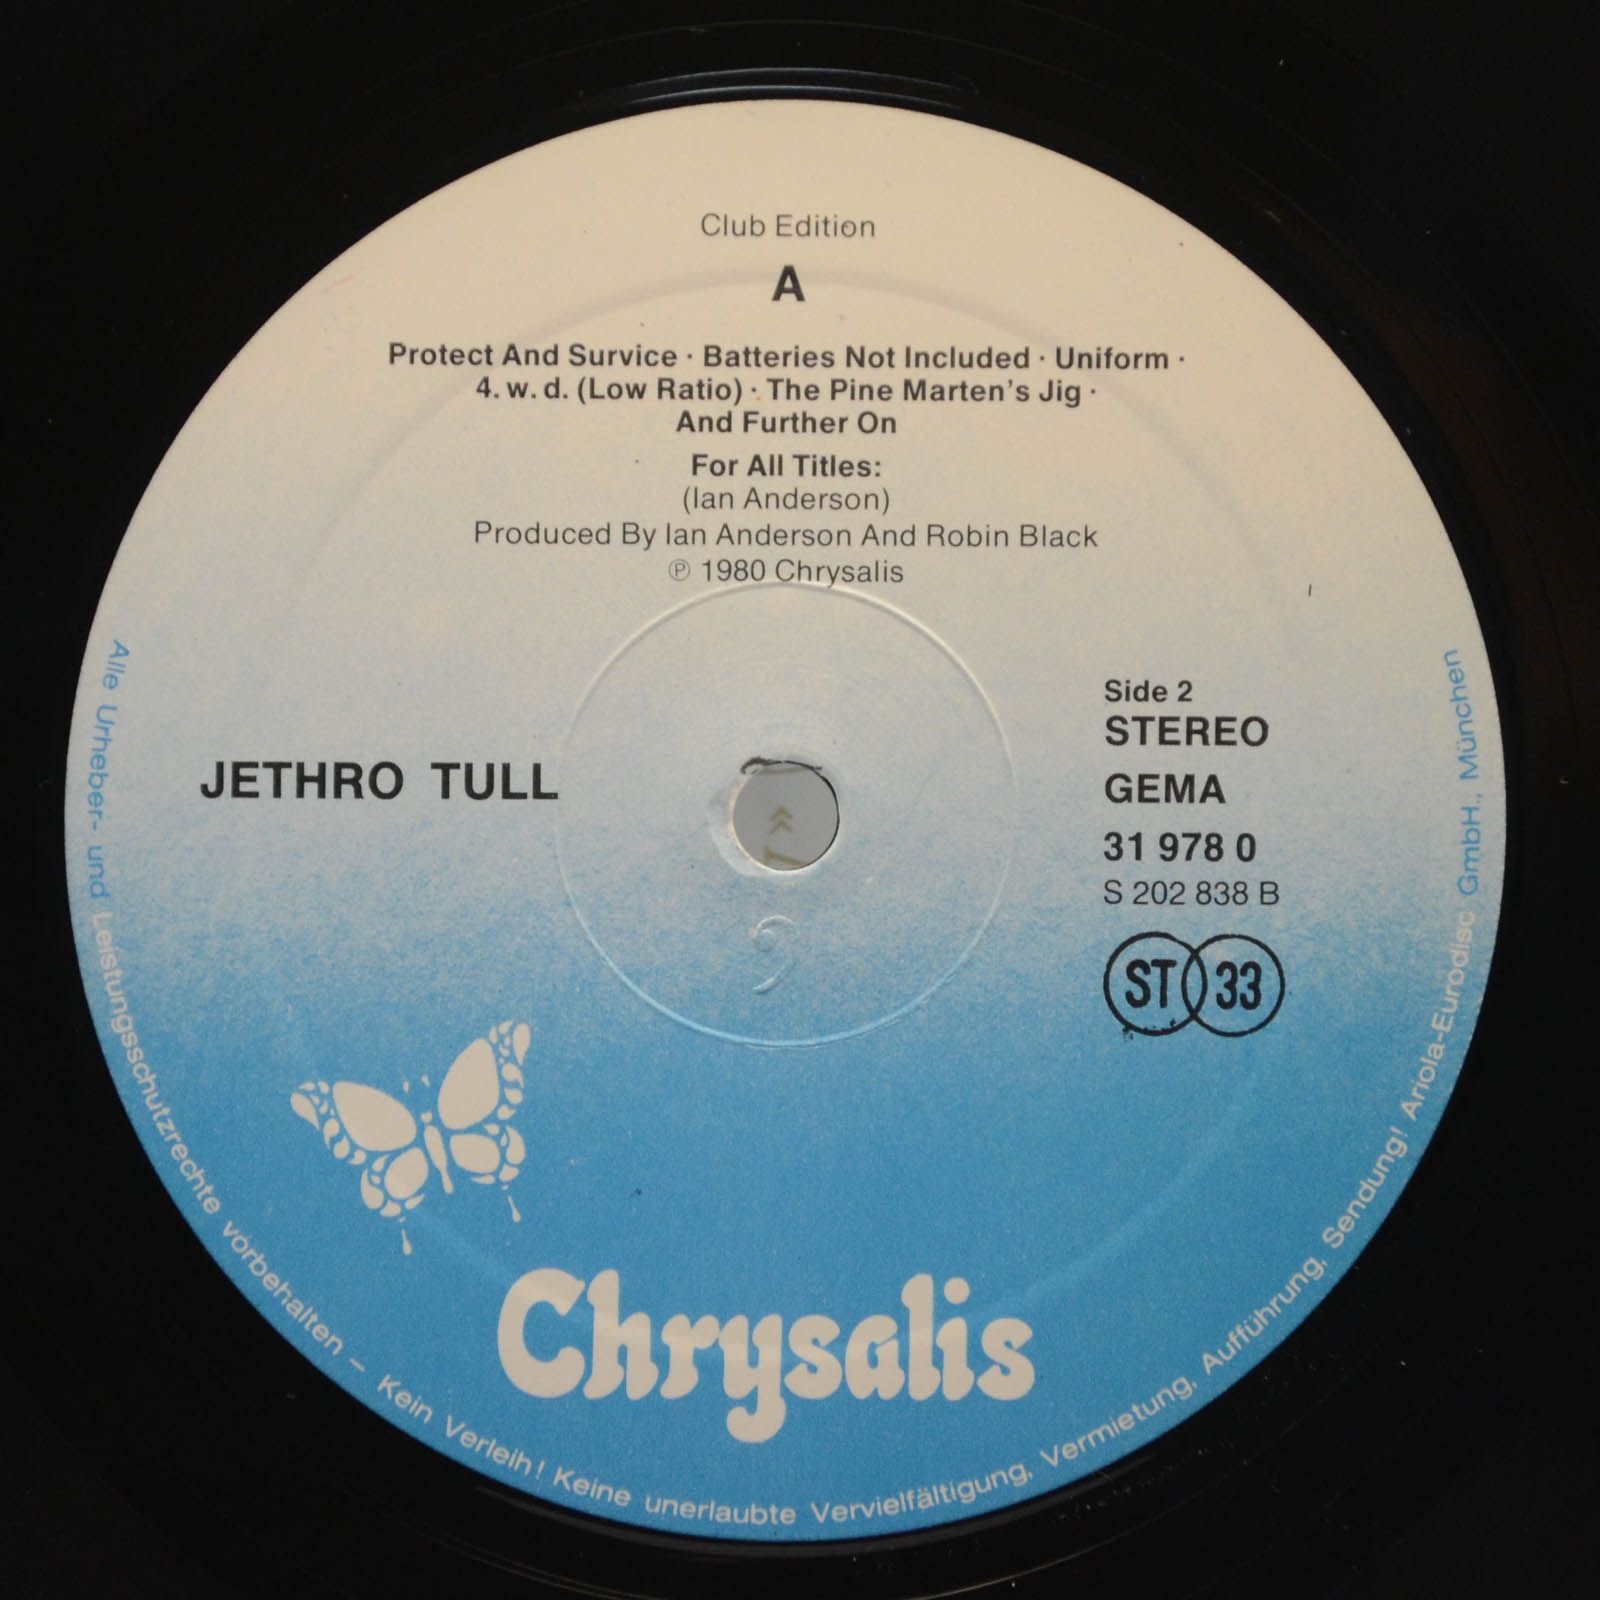 Jethro Tull — A, 1980